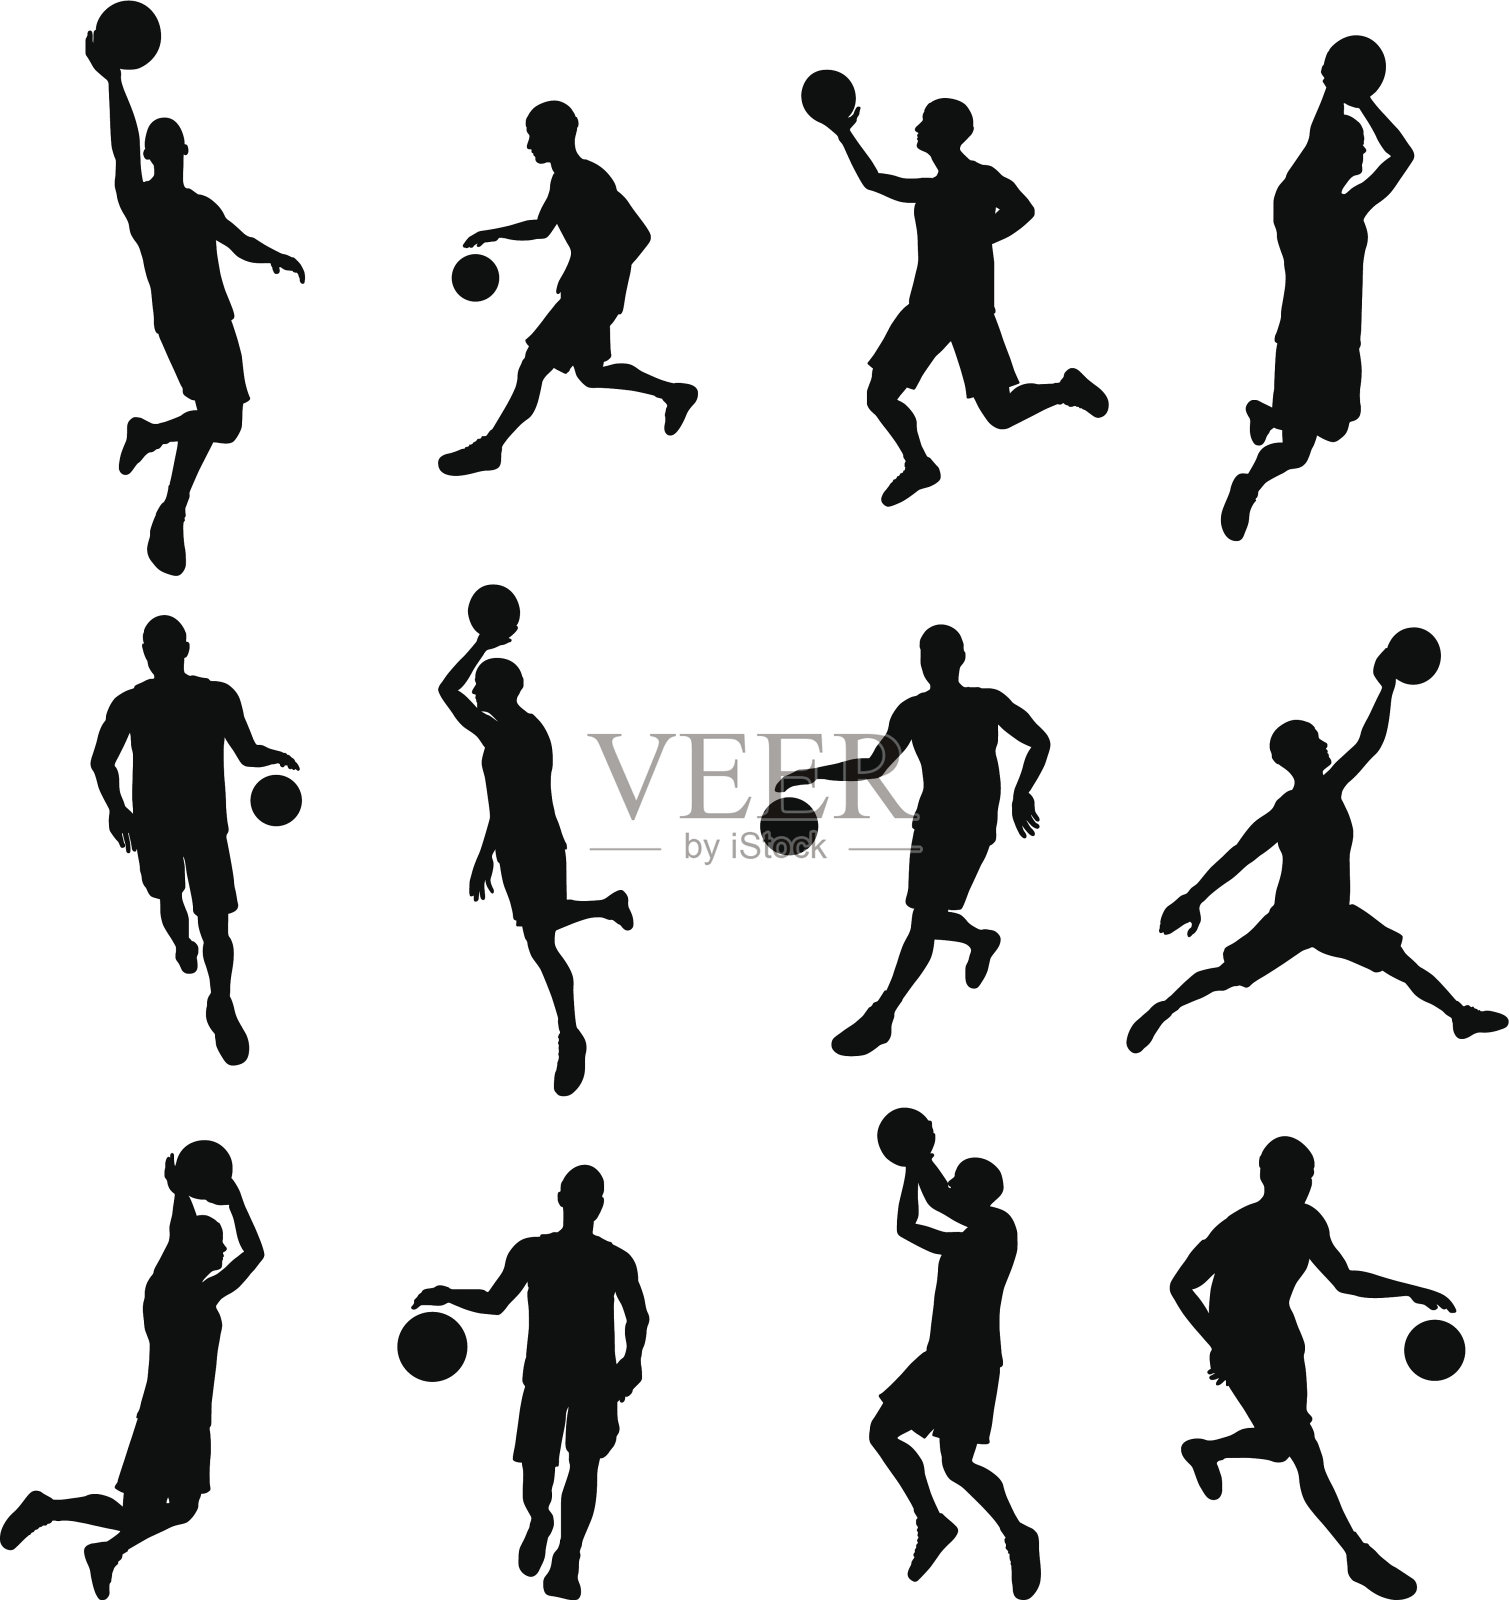 Basketballl球员轮廓插画图片素材